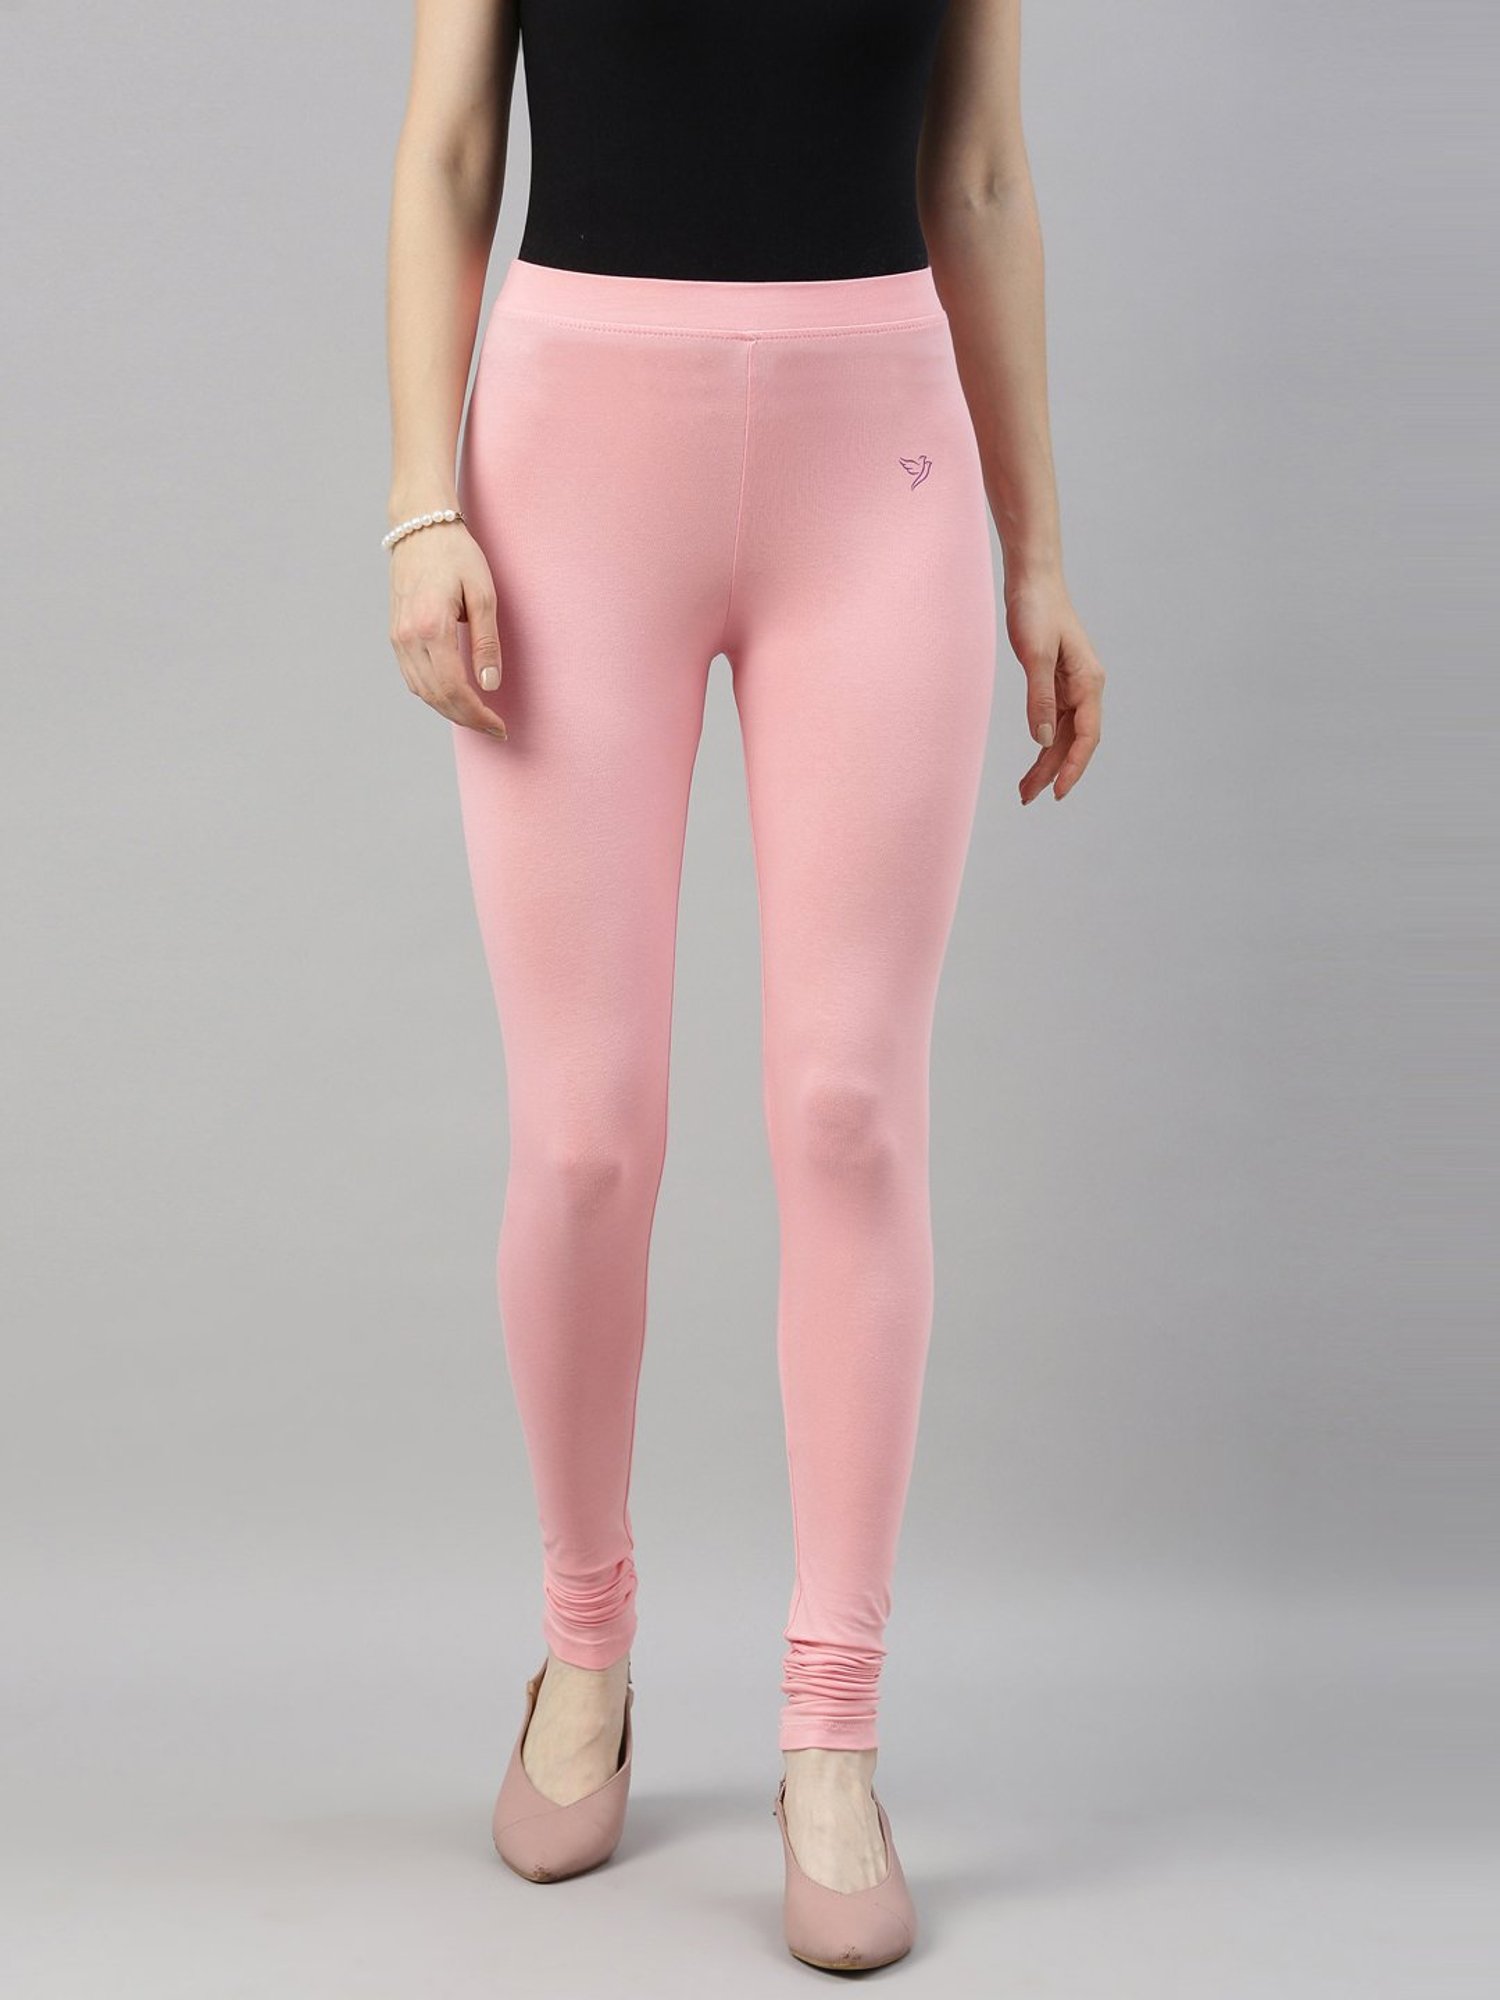 Buy TWIN BIRDS Pink Cotton Full Length Leggings for Women Online @ Tata CLiQ